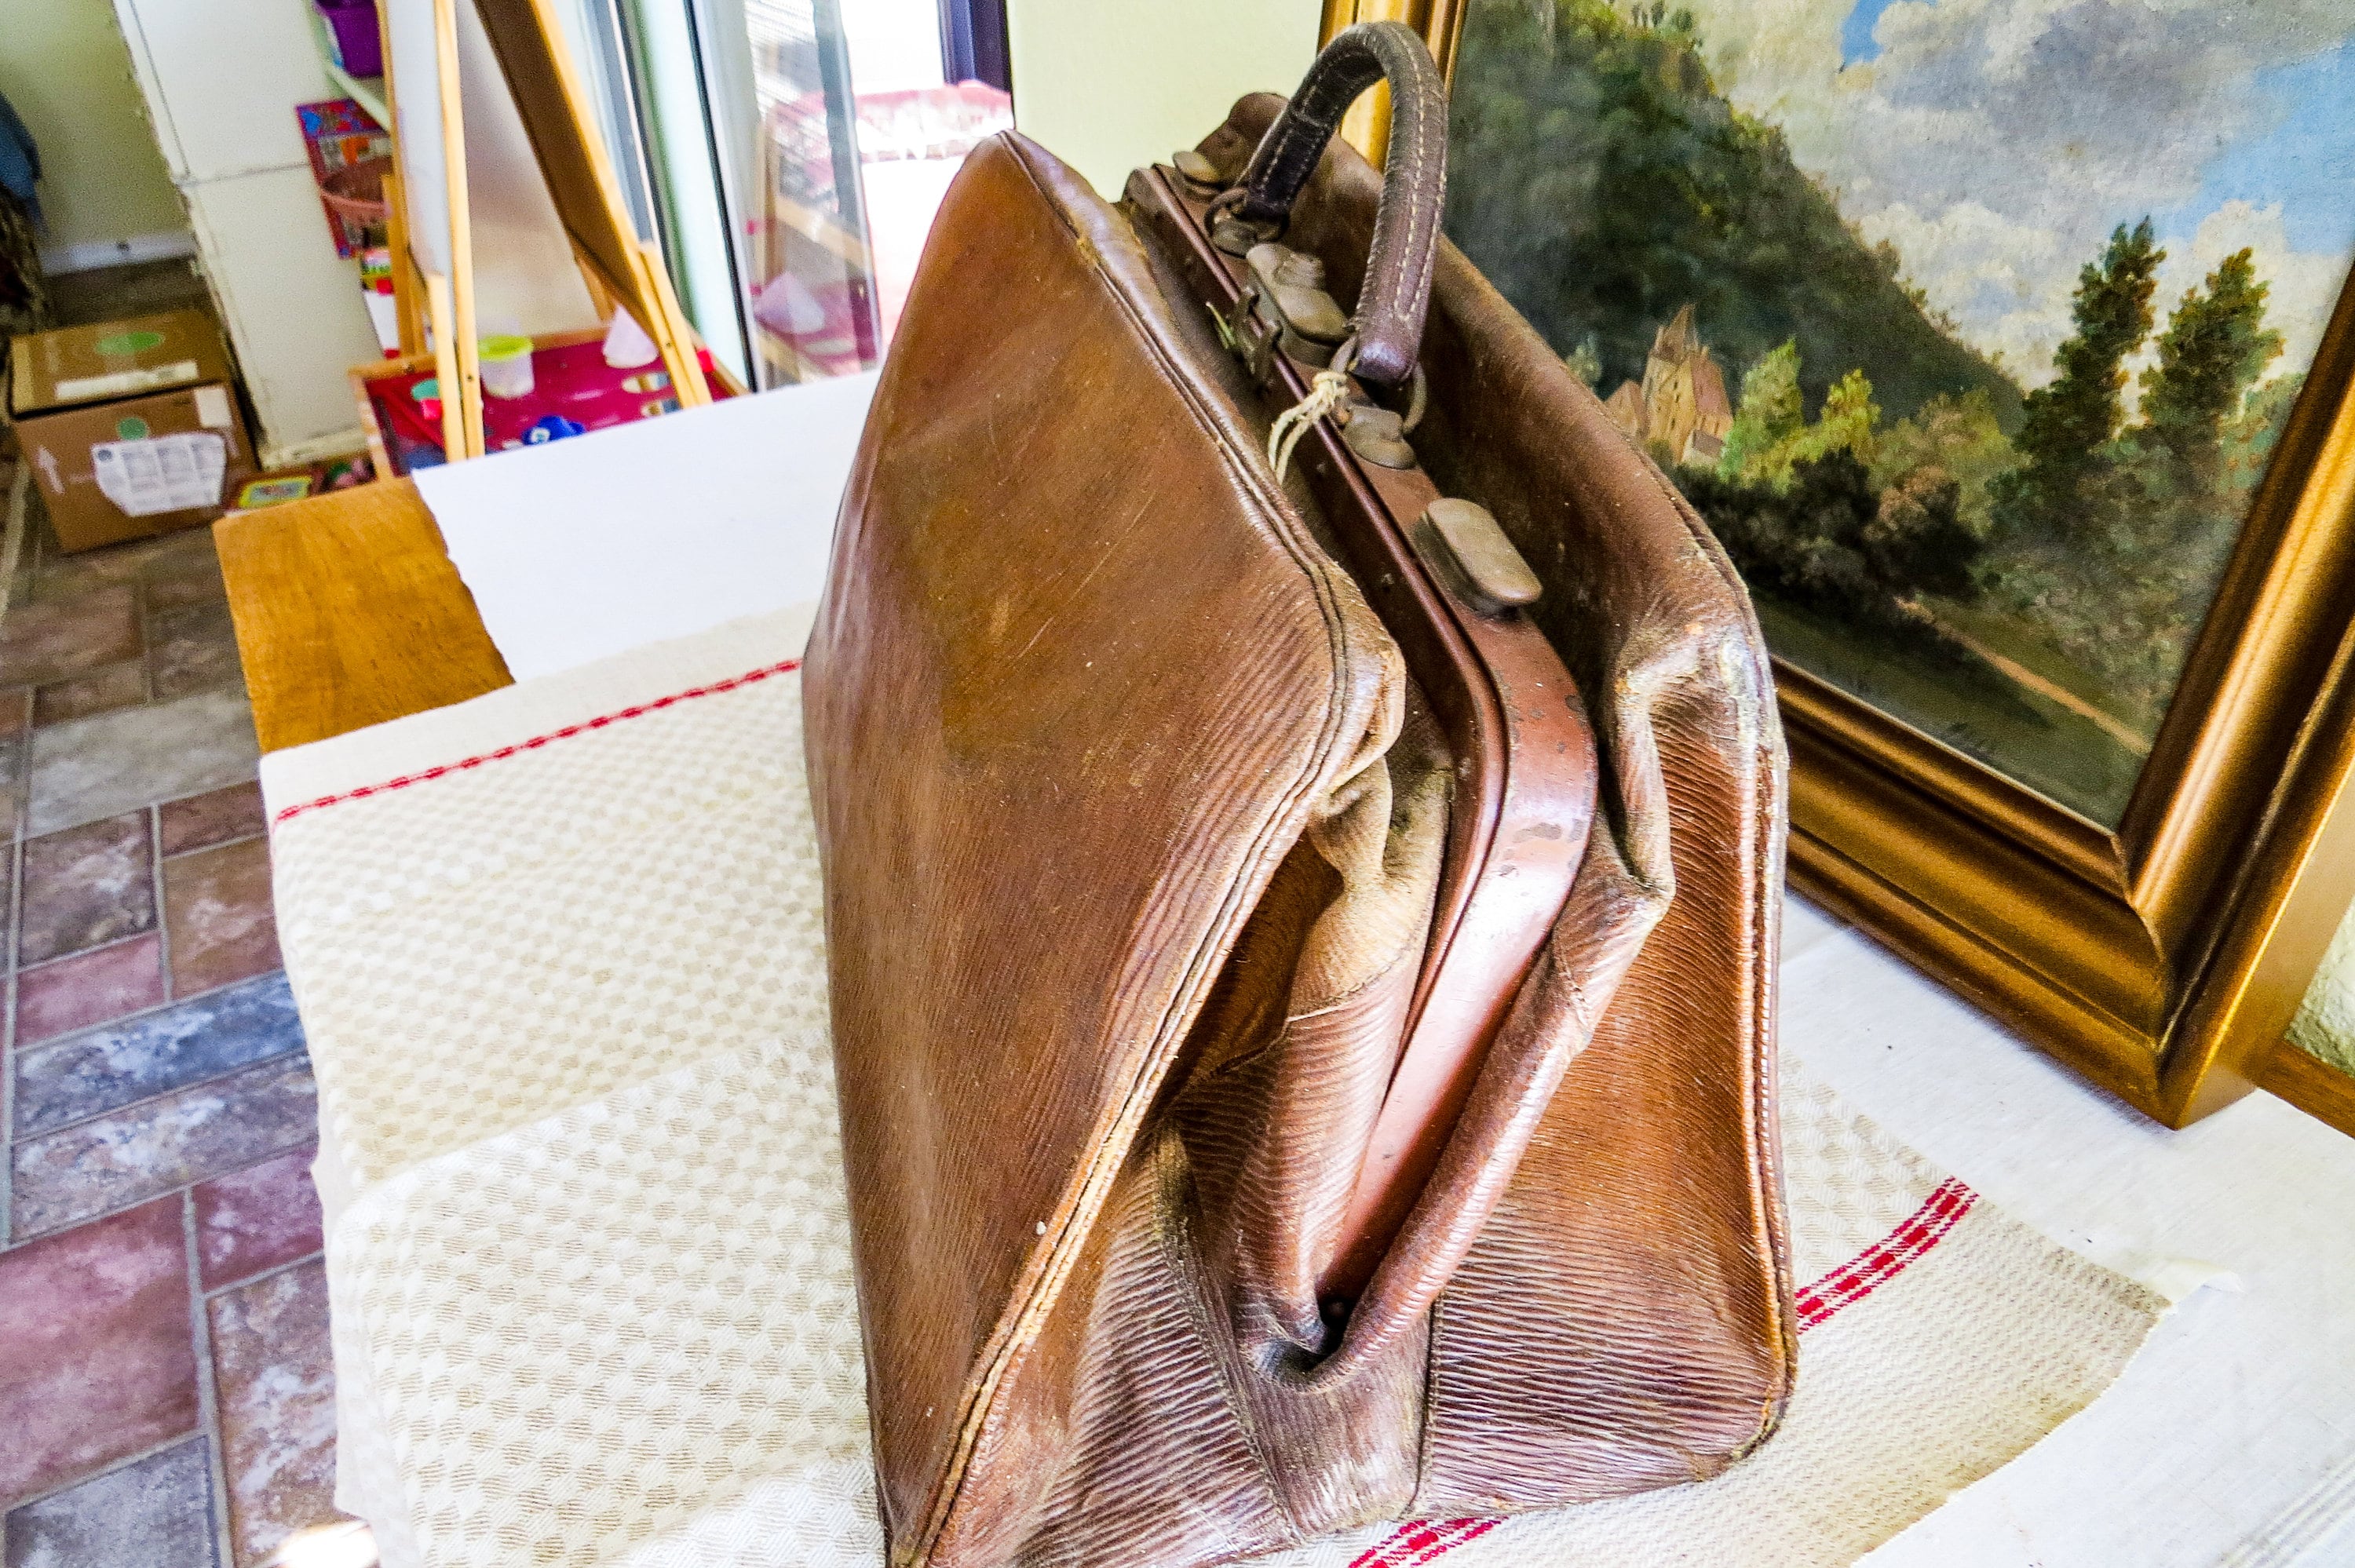 Victorian Crocodile Skin Gladstone Bag & Plaque in Antique Luggage & Bags